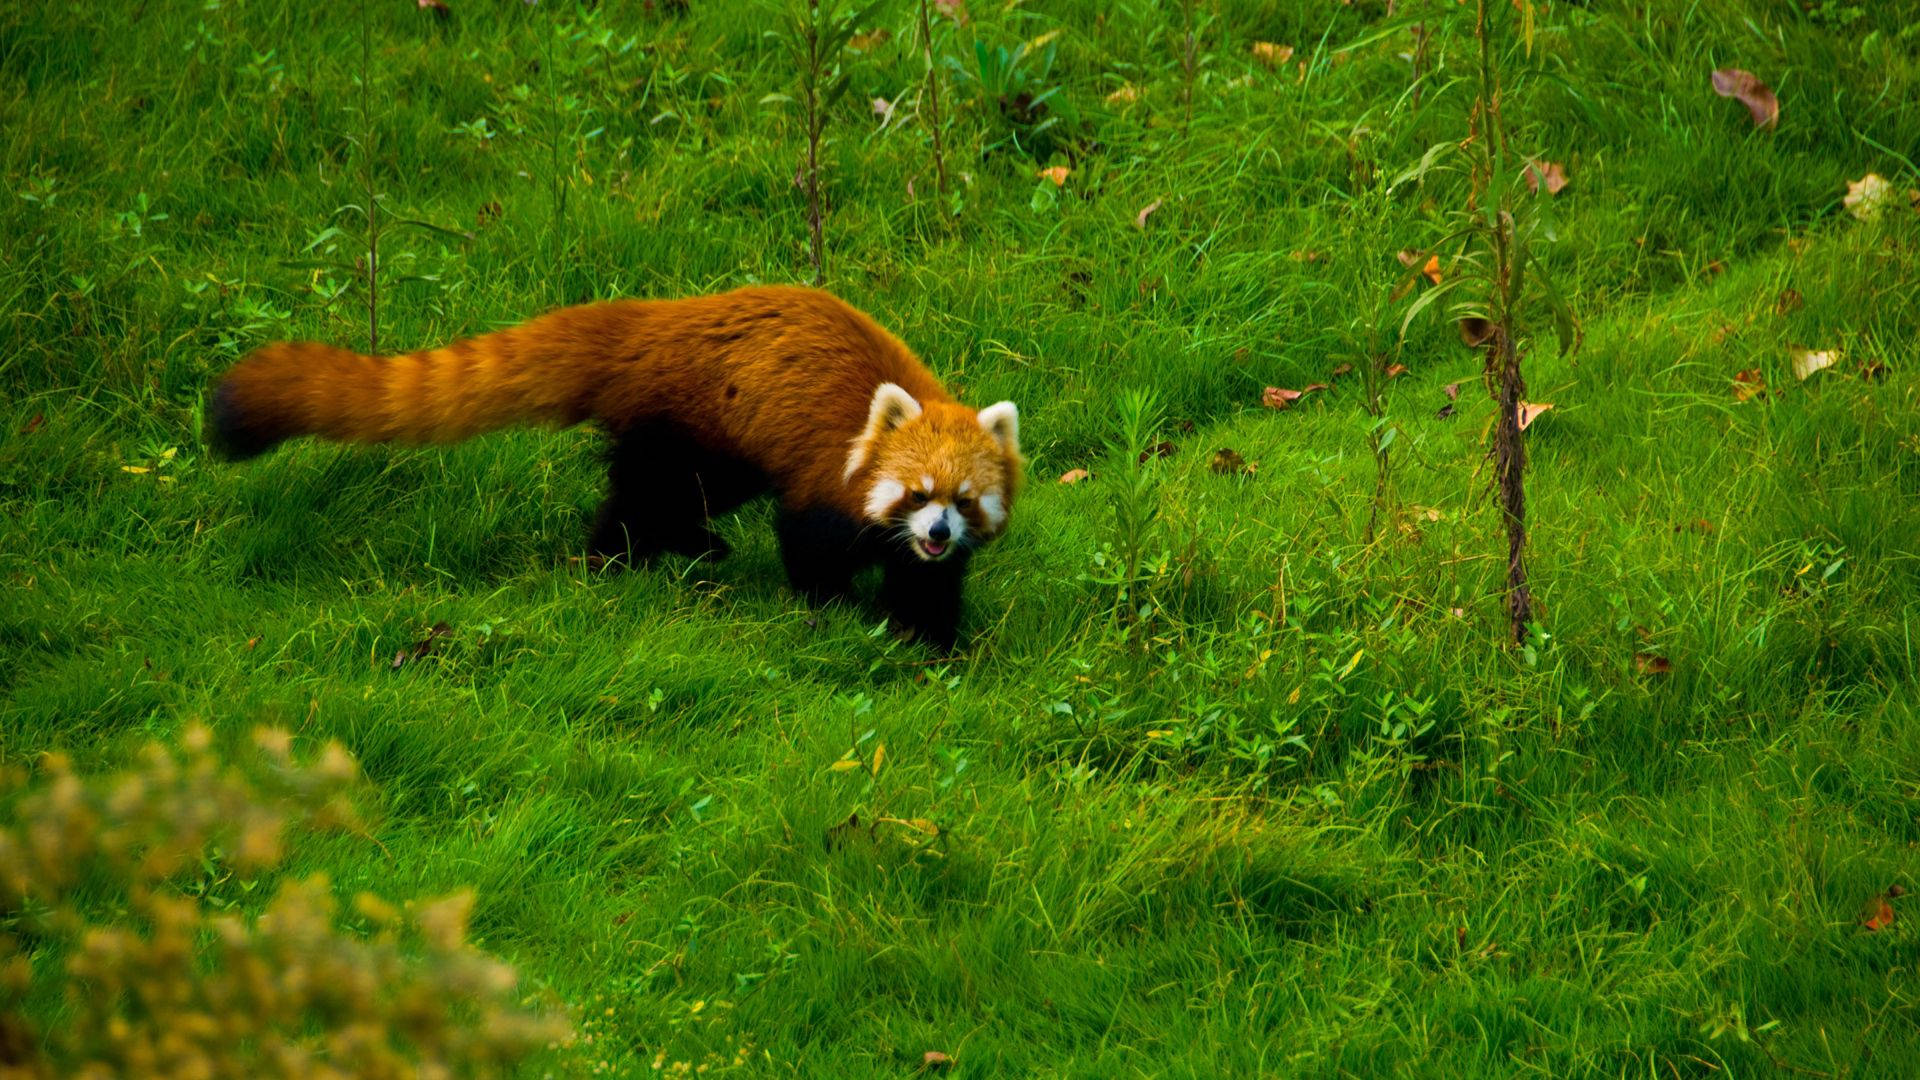 Red Panda On Grassy Field Wallpaper